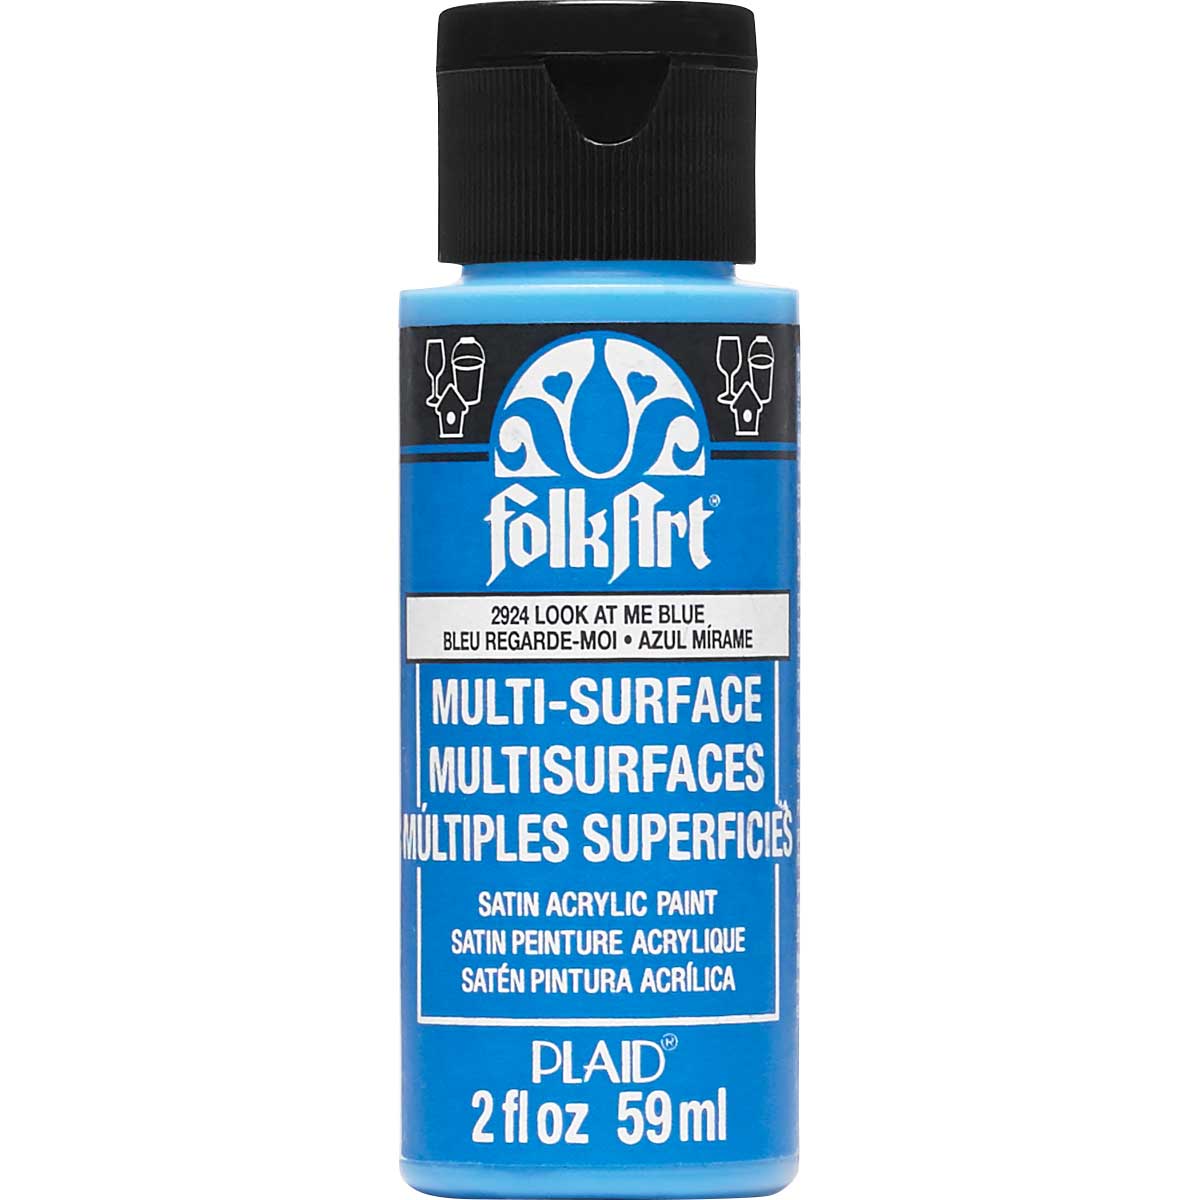 FolkArt ® Multi-Surface Satin Acrylic Paints - Look at Me Blue, 2 oz. - 2924